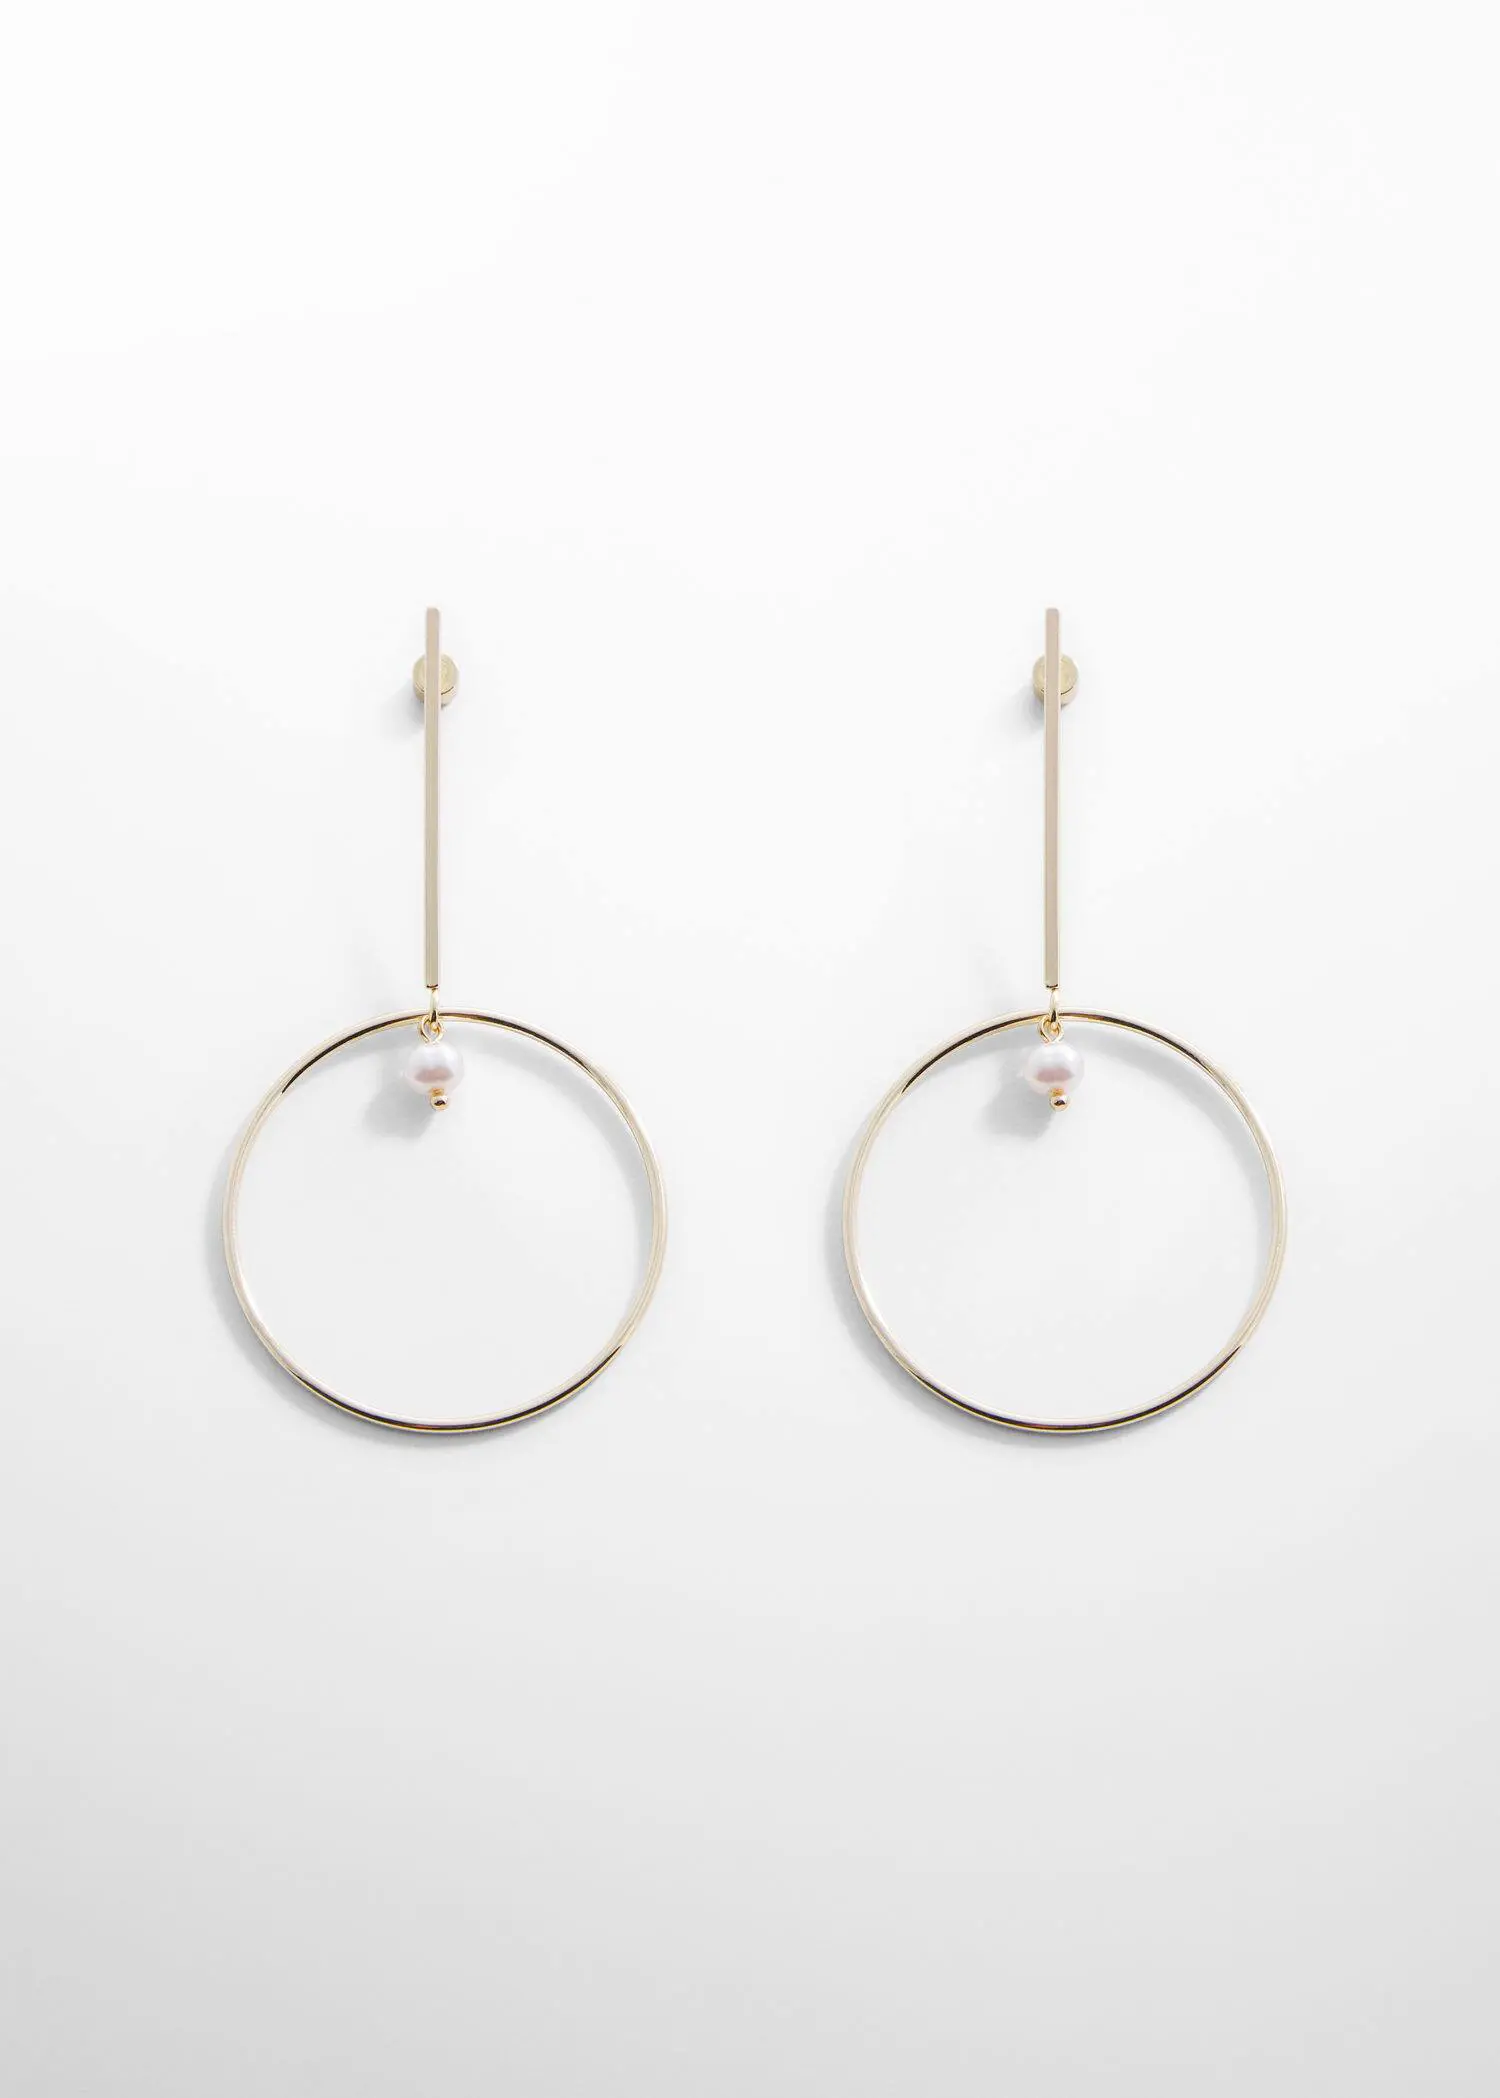 Mango Thread hoop earrings. a pair of earrings hanging on a white wall. 